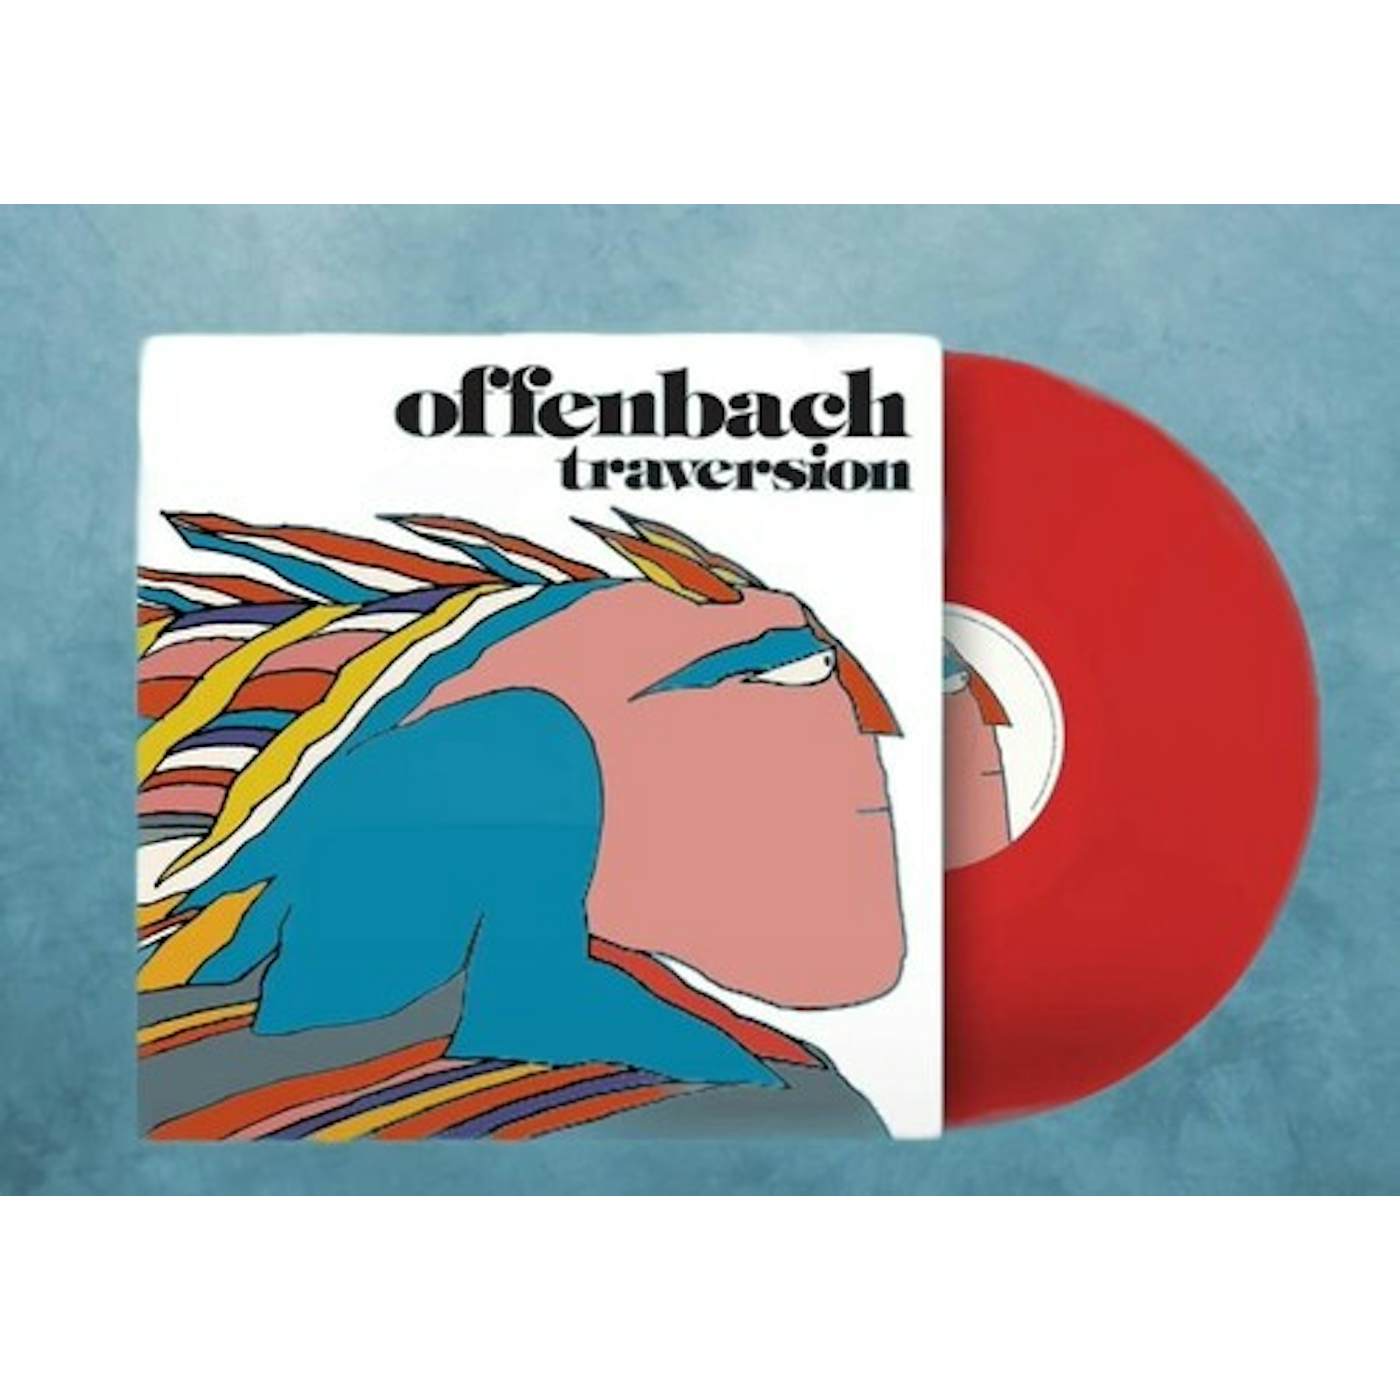 Offenbach Traversion Vinyl Record